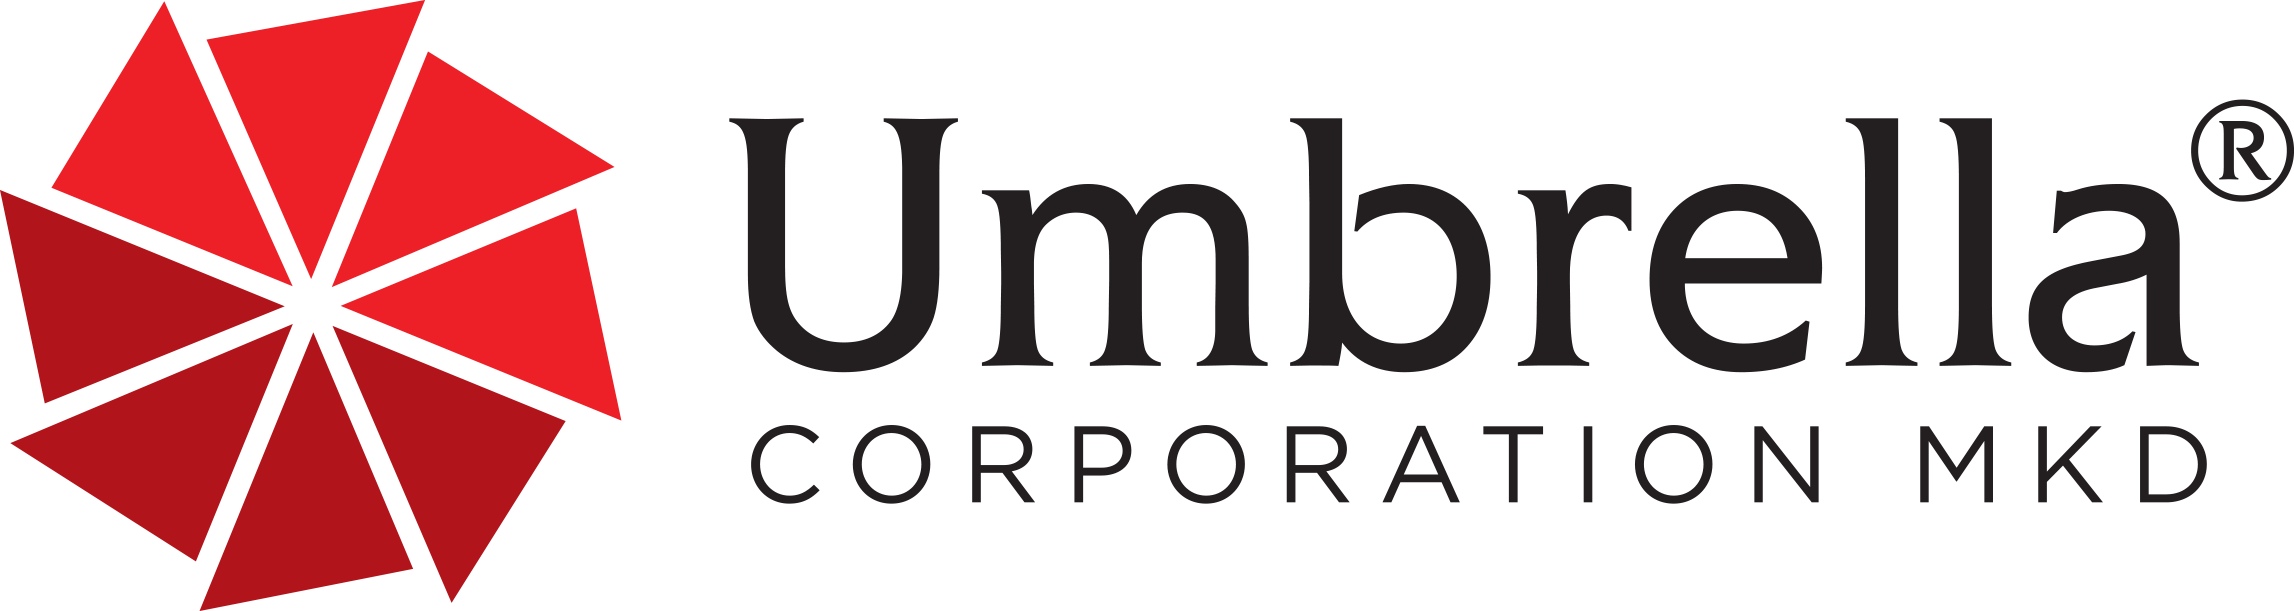 Umbrella Corporation Doo - Salvation Army Kroc Center Logo (2294x611), Png Download